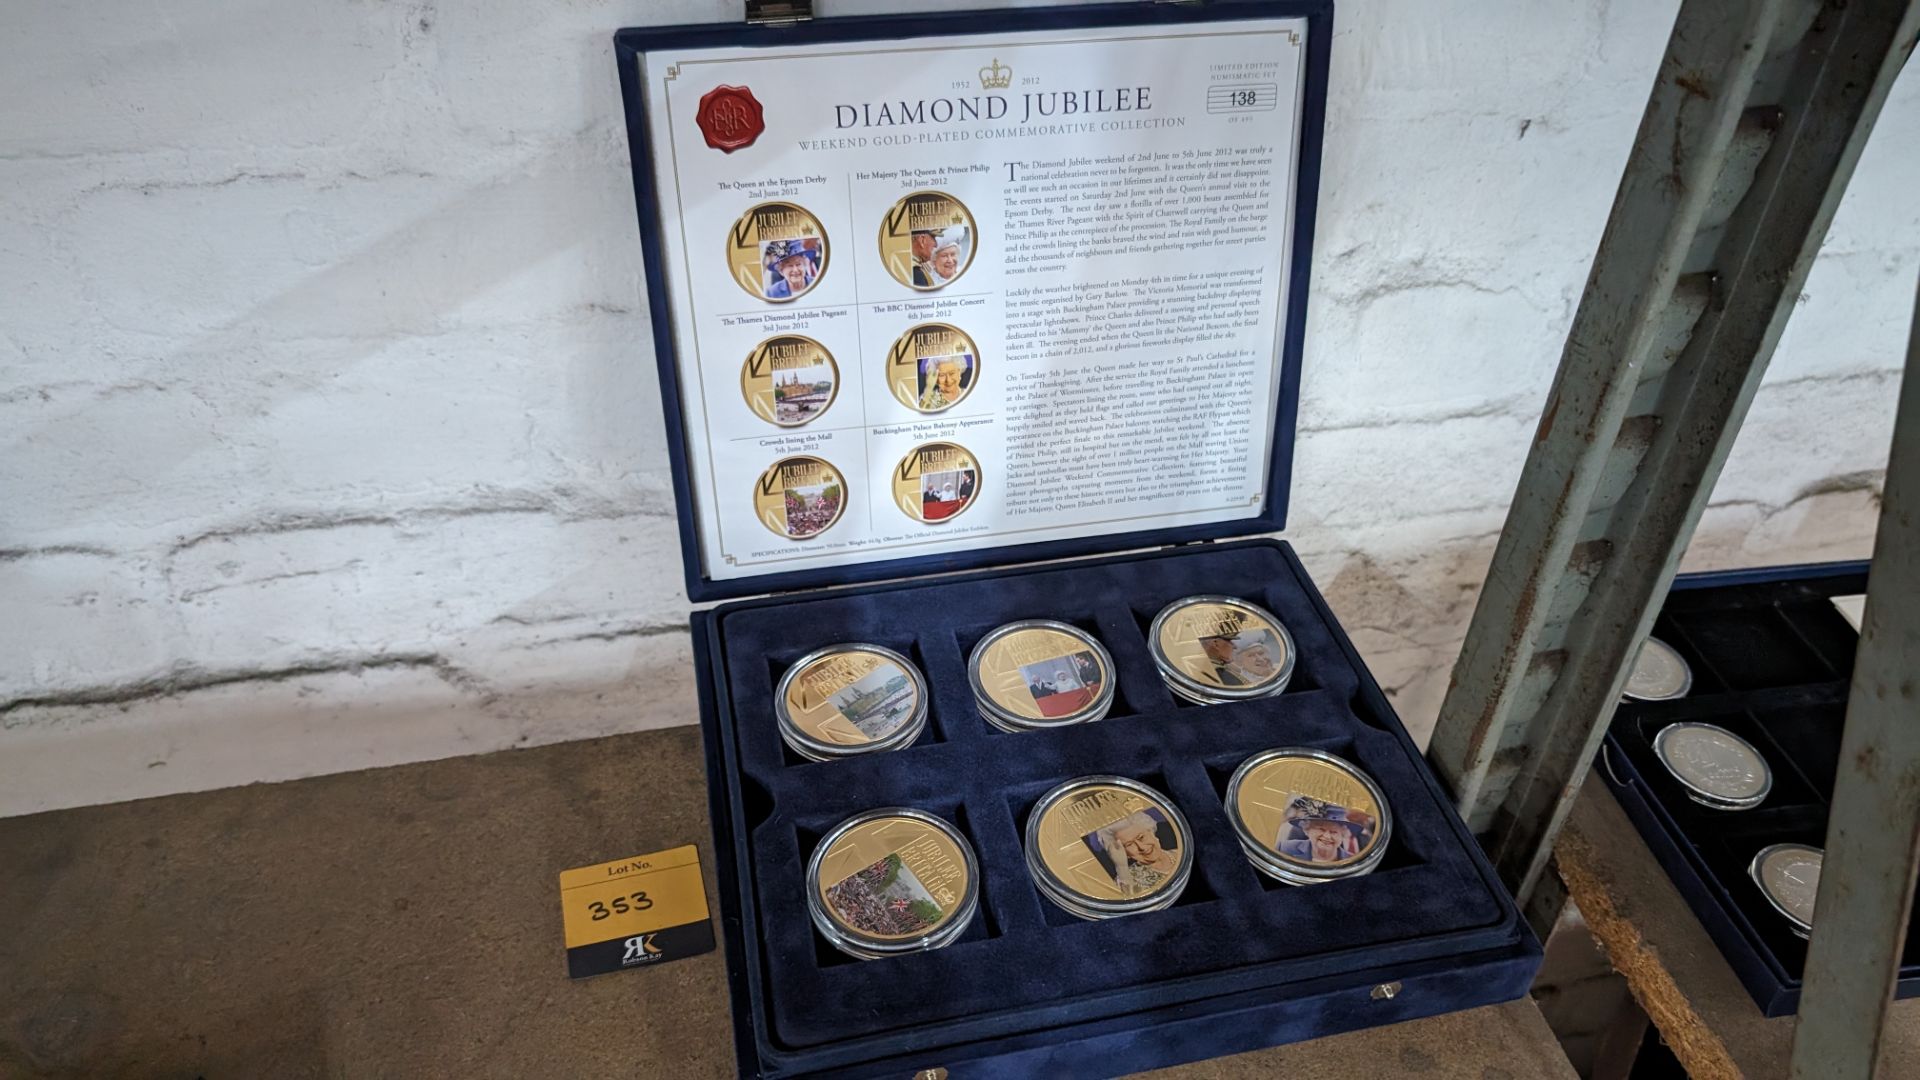 Diamond Jubilee set of 6 decorative coins including presentation case - Image 2 of 12